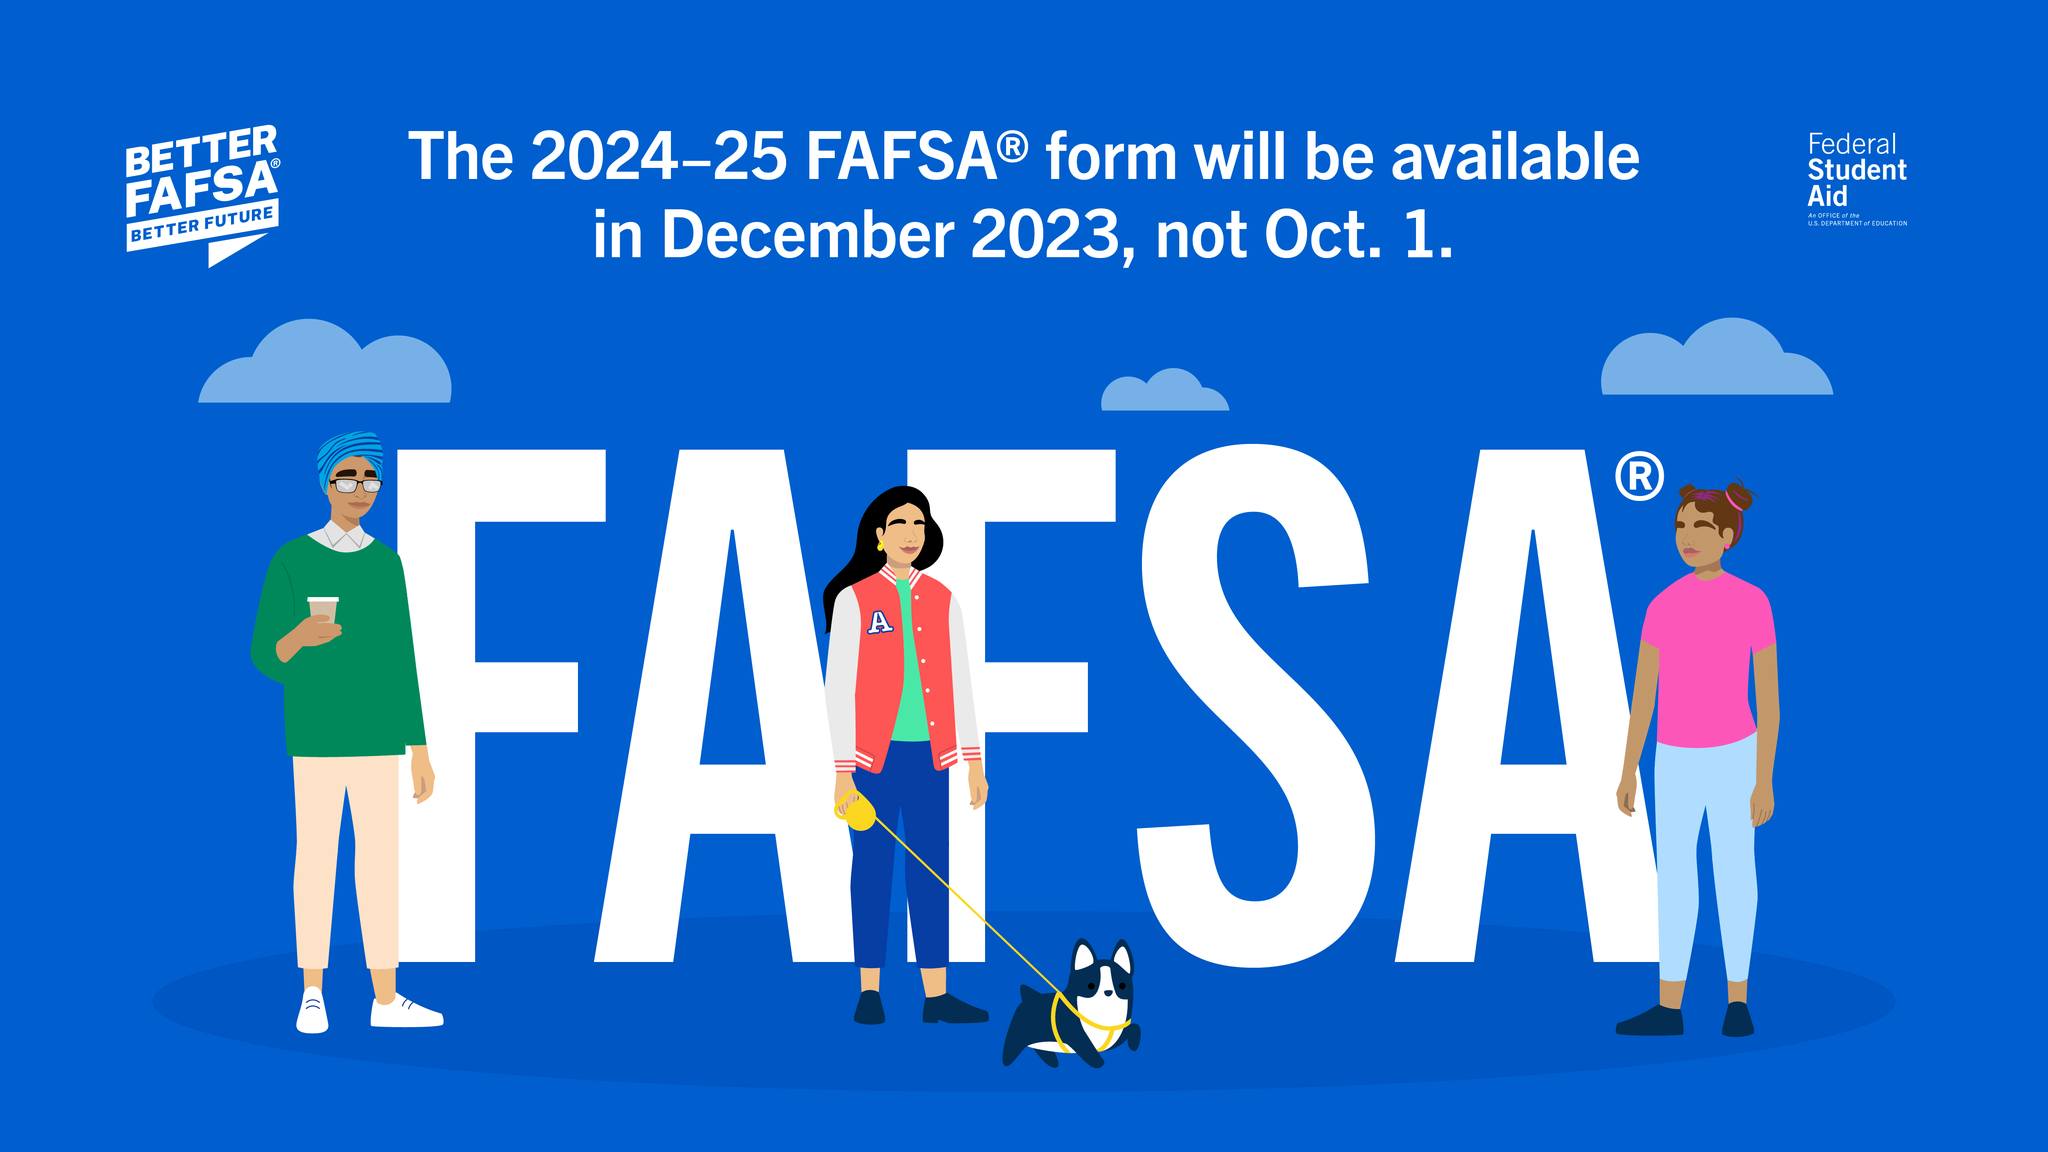 Federal Student Aid 2024-25 FAFSA